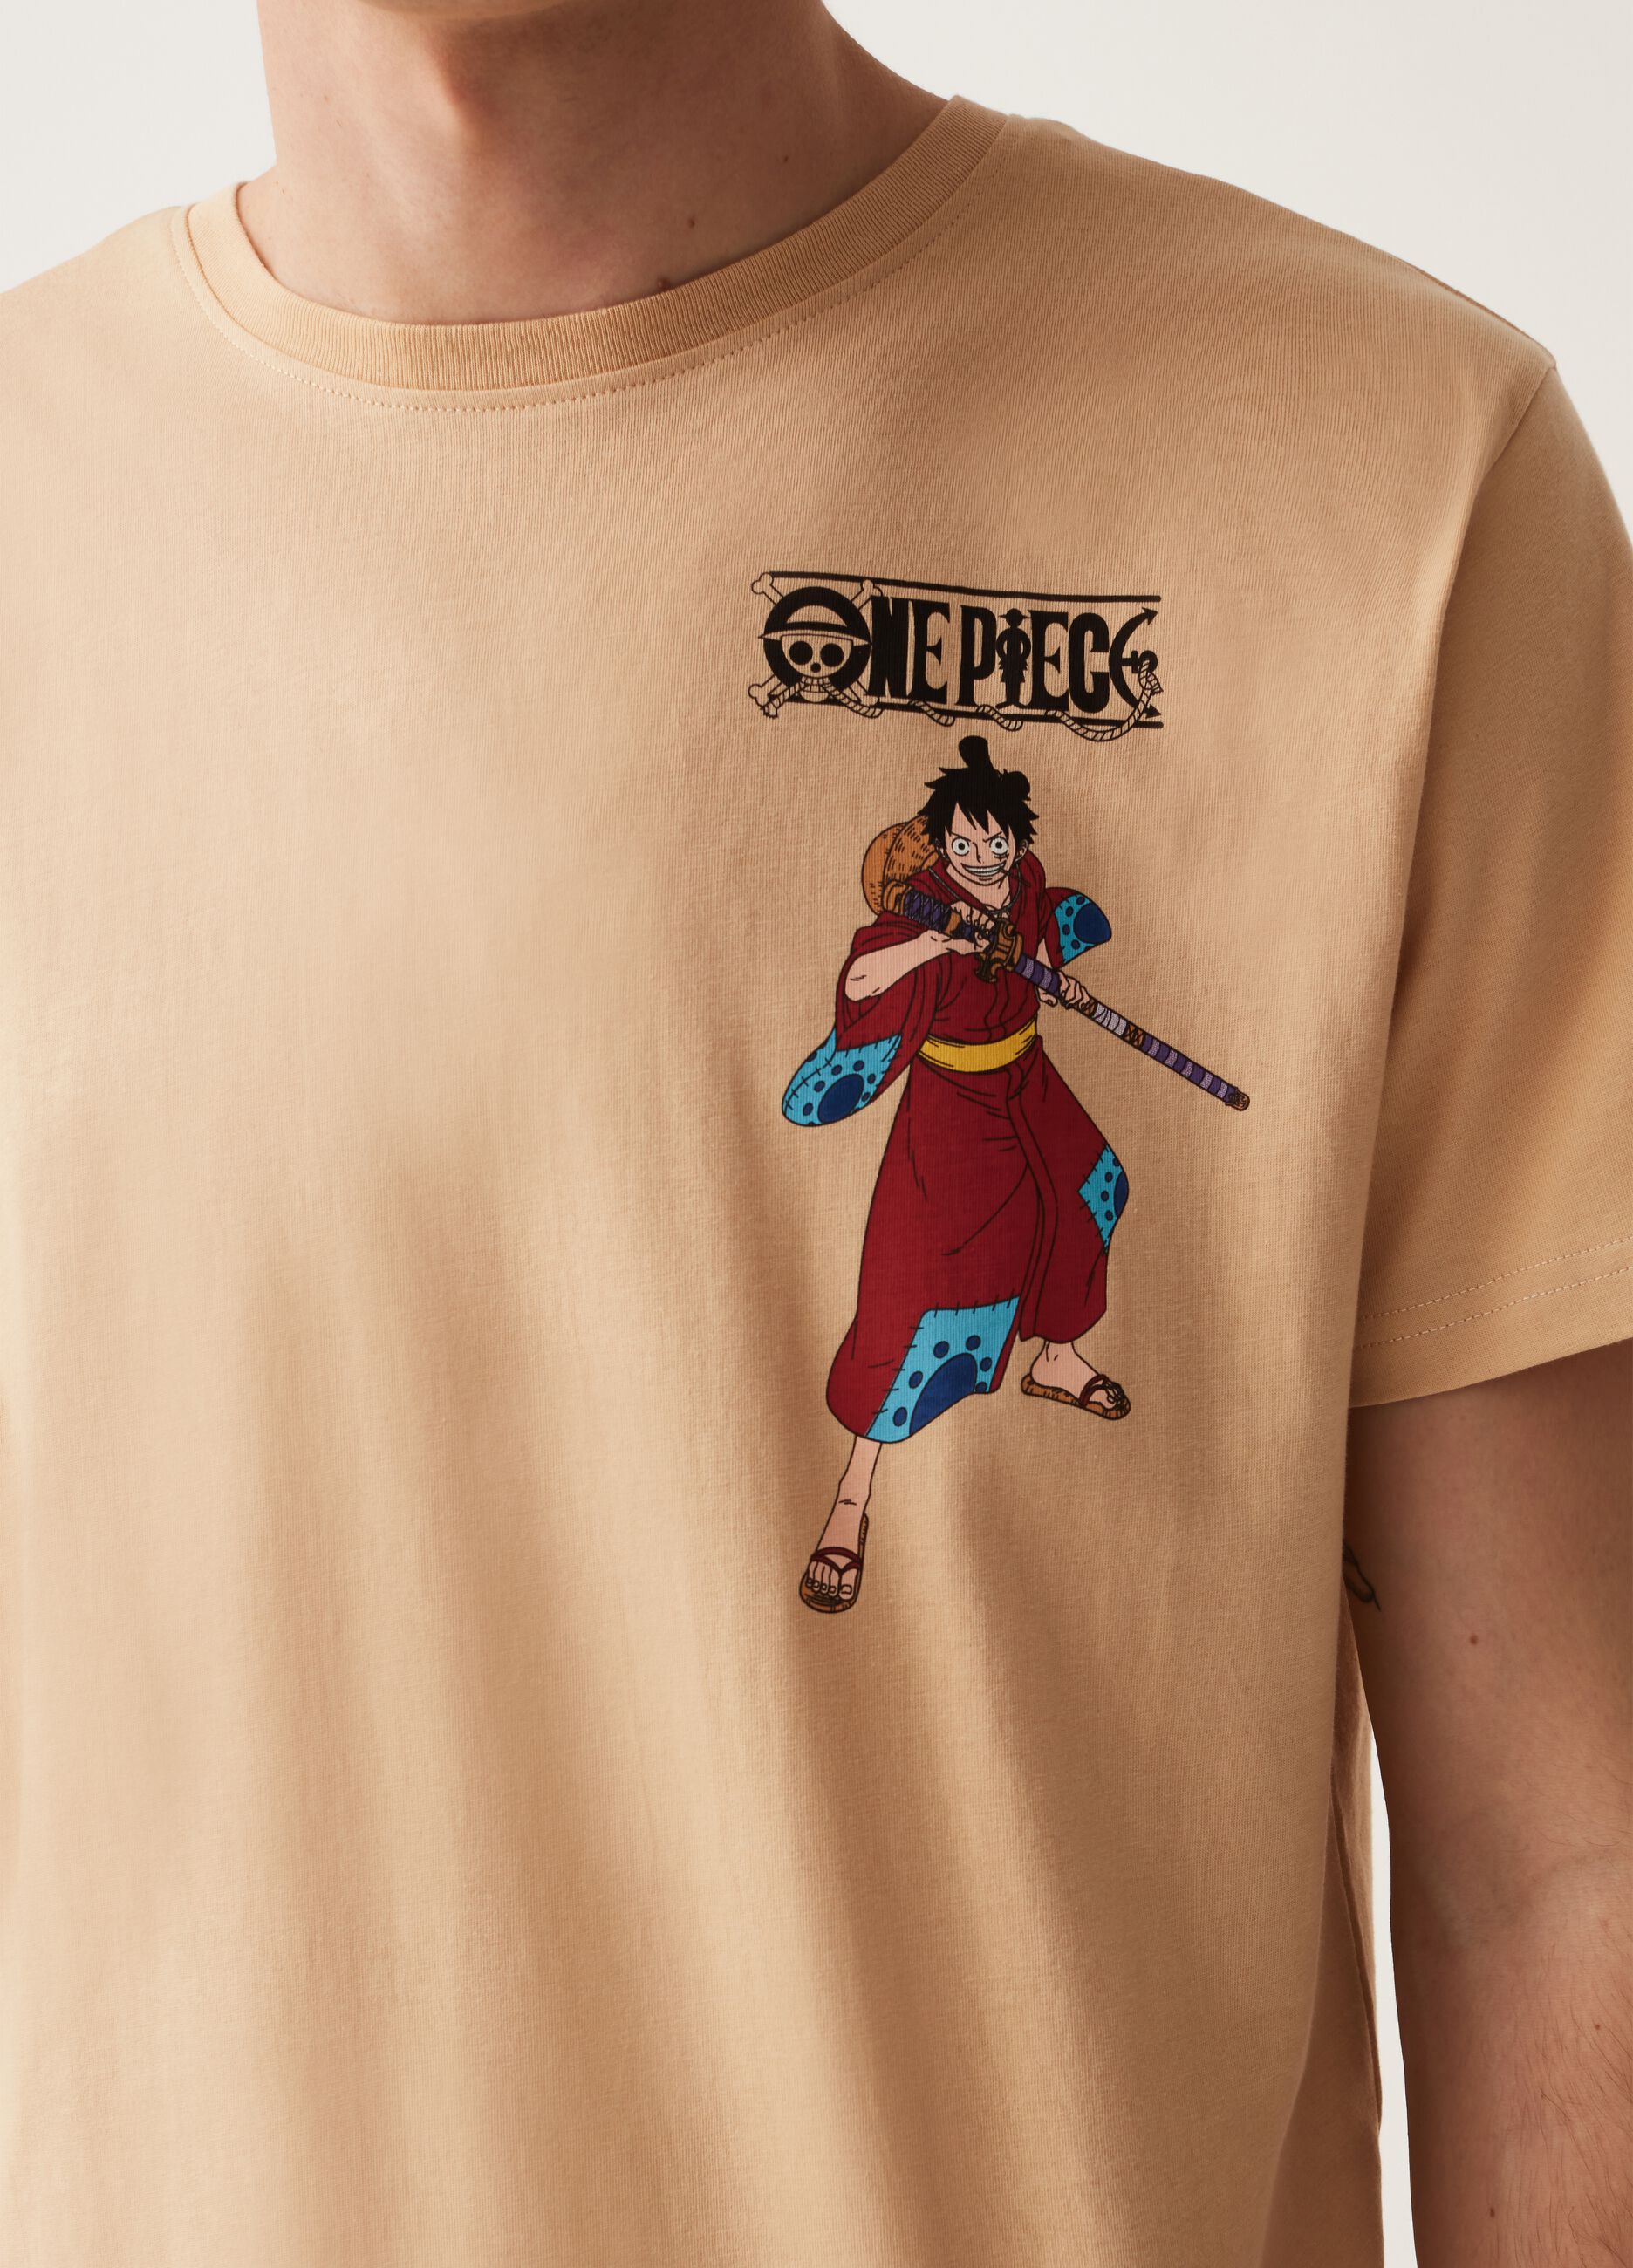 Camiseta estampado personajes One Piece